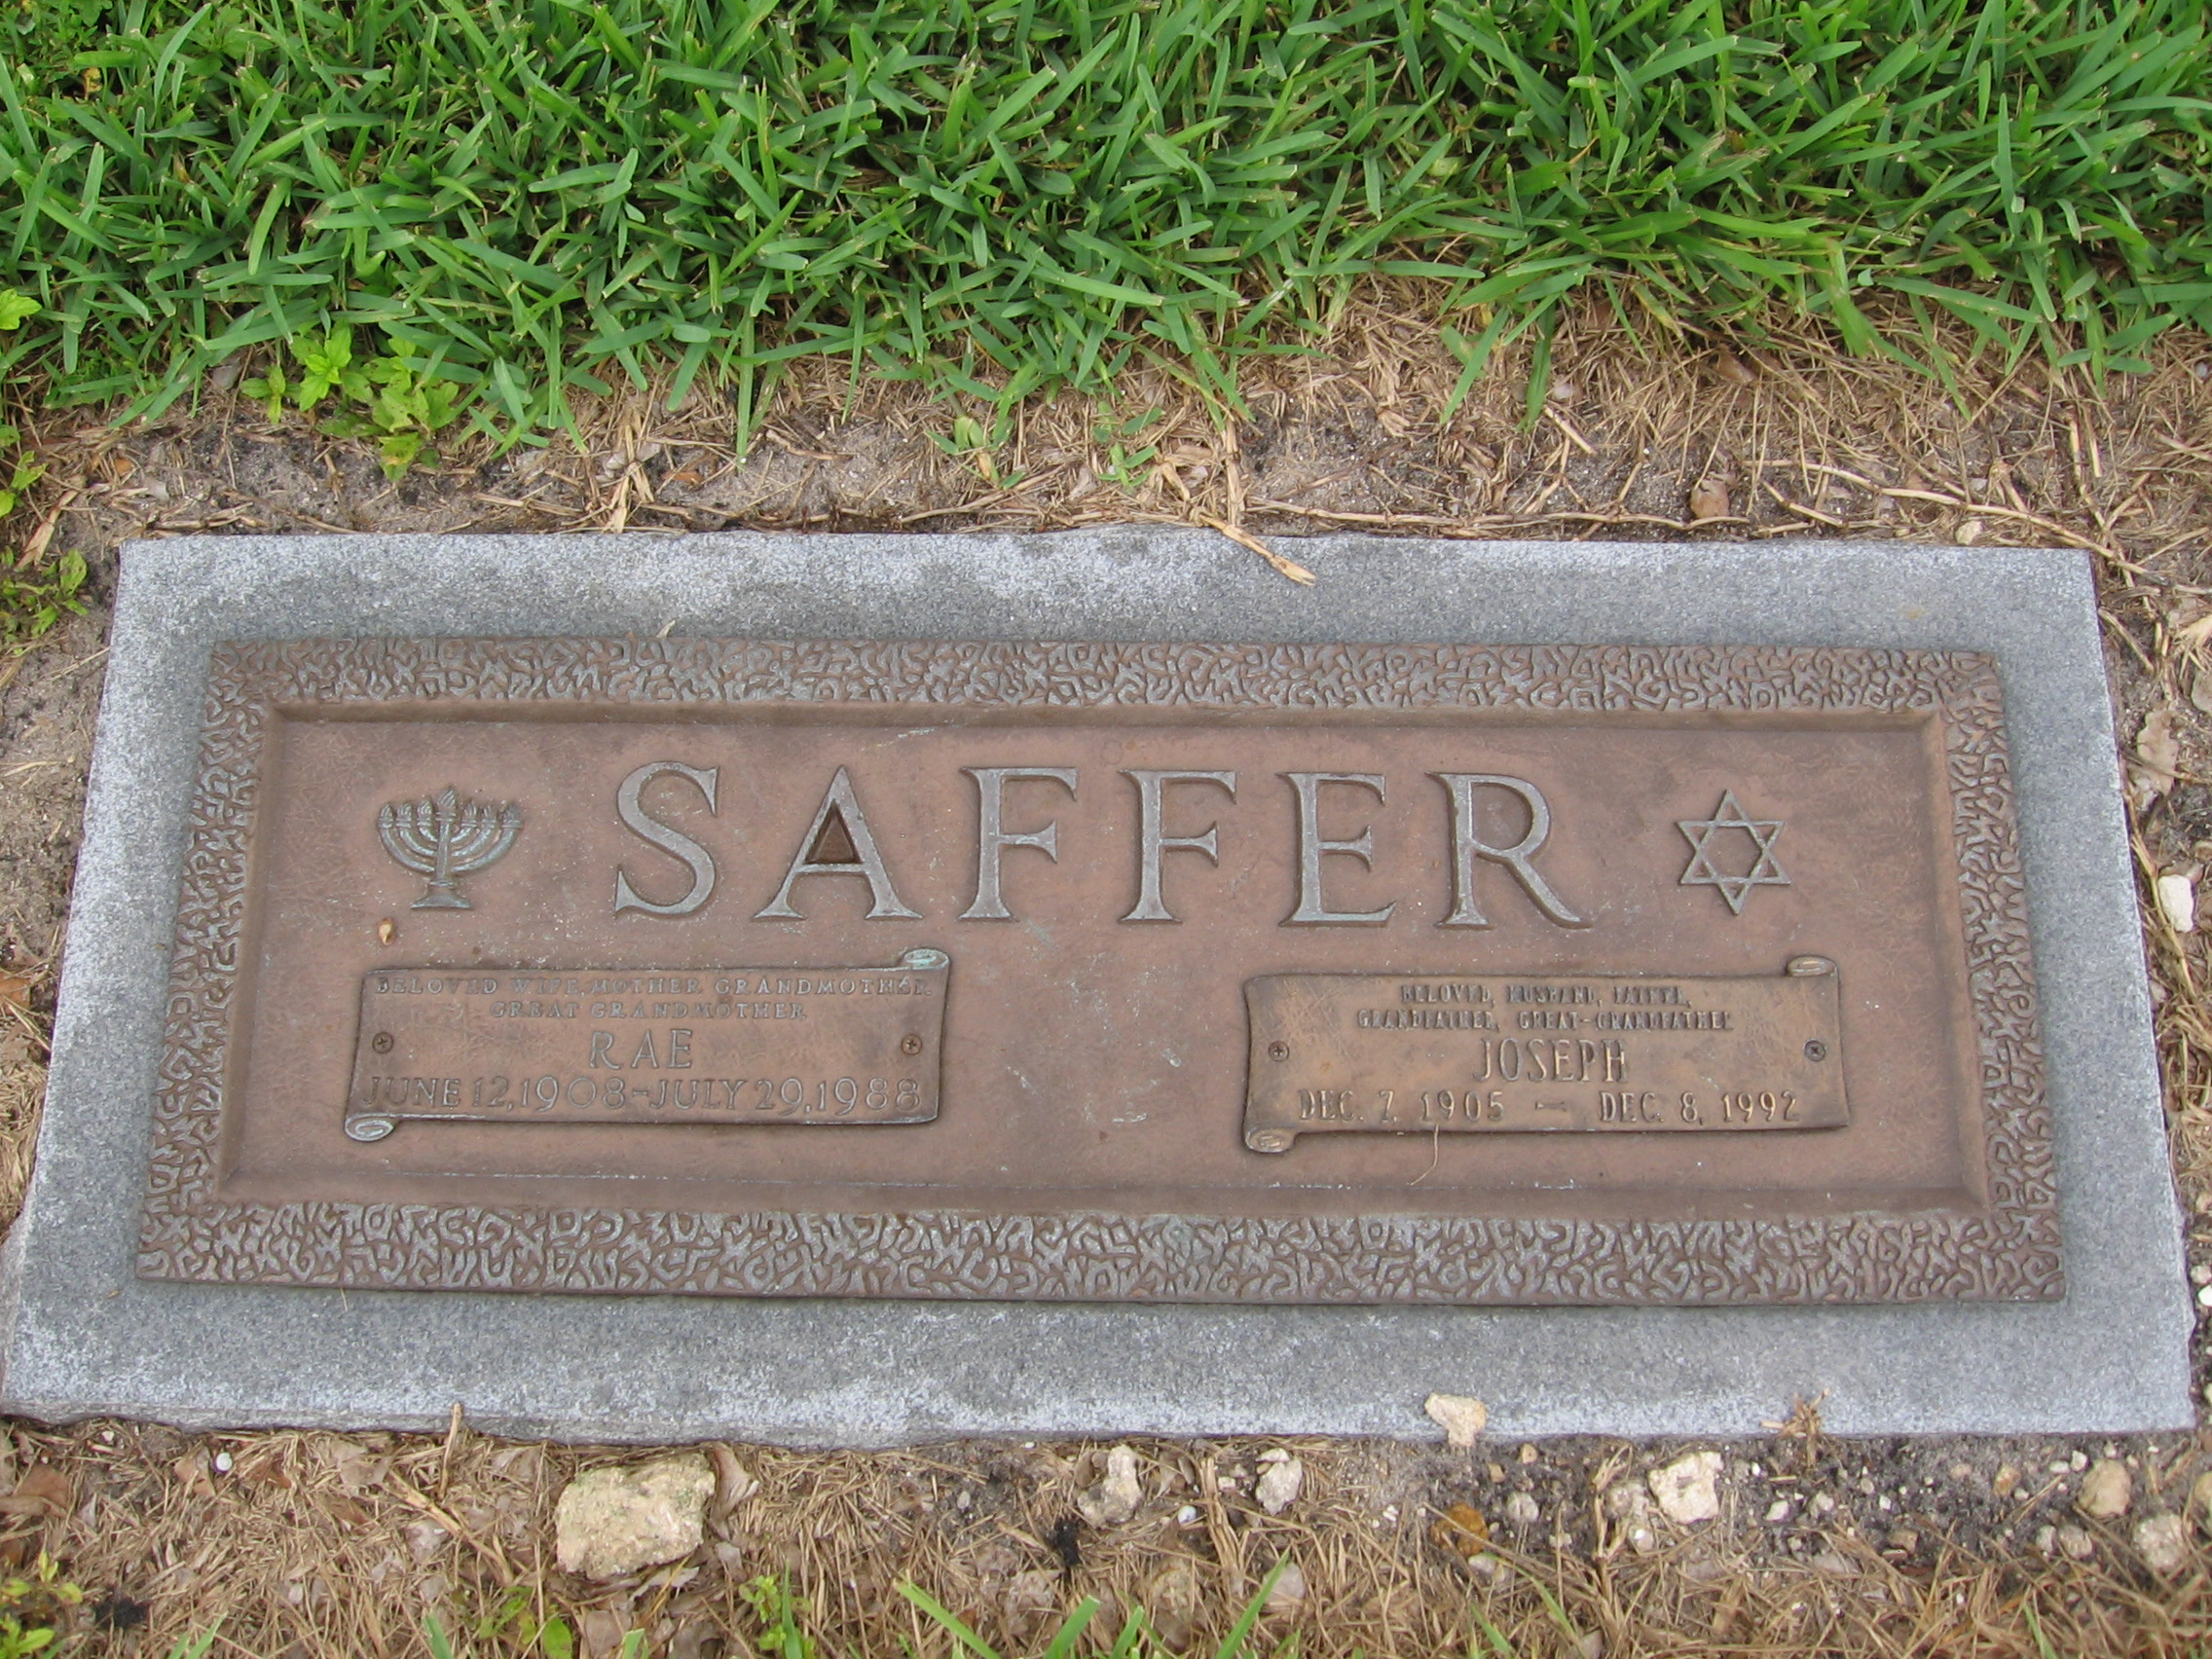 Joseph Saffer